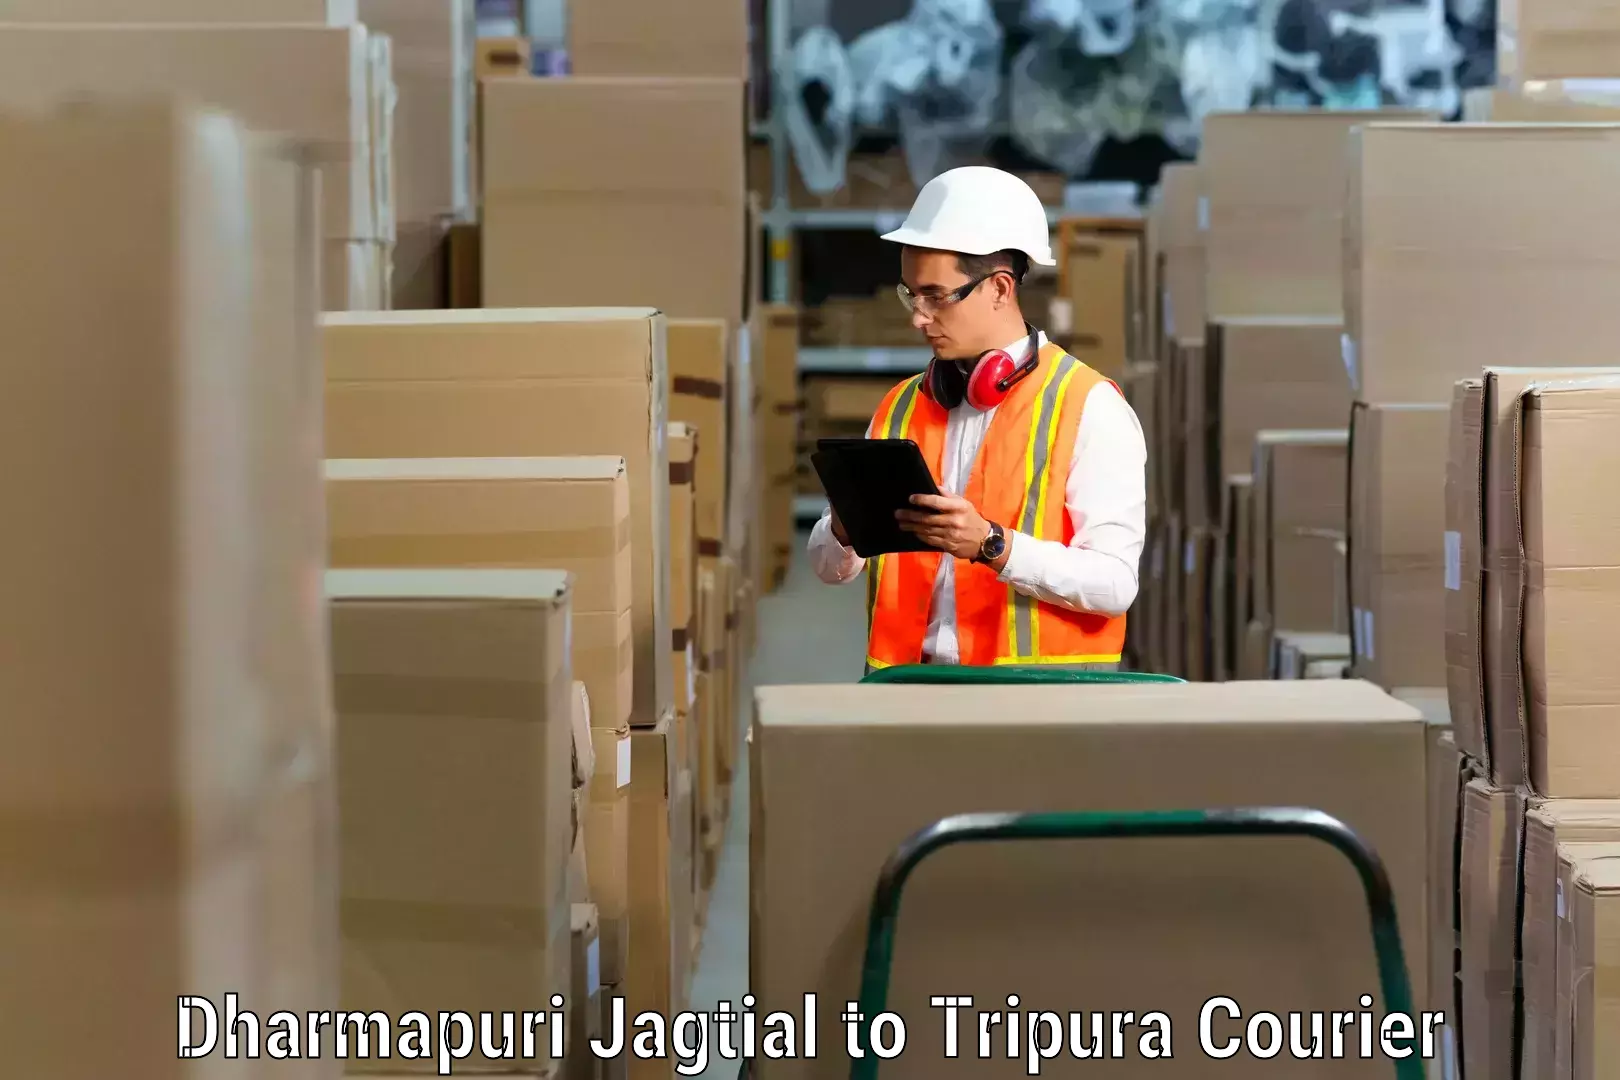 Trusted moving company Dharmapuri Jagtial to Udaipur Tripura